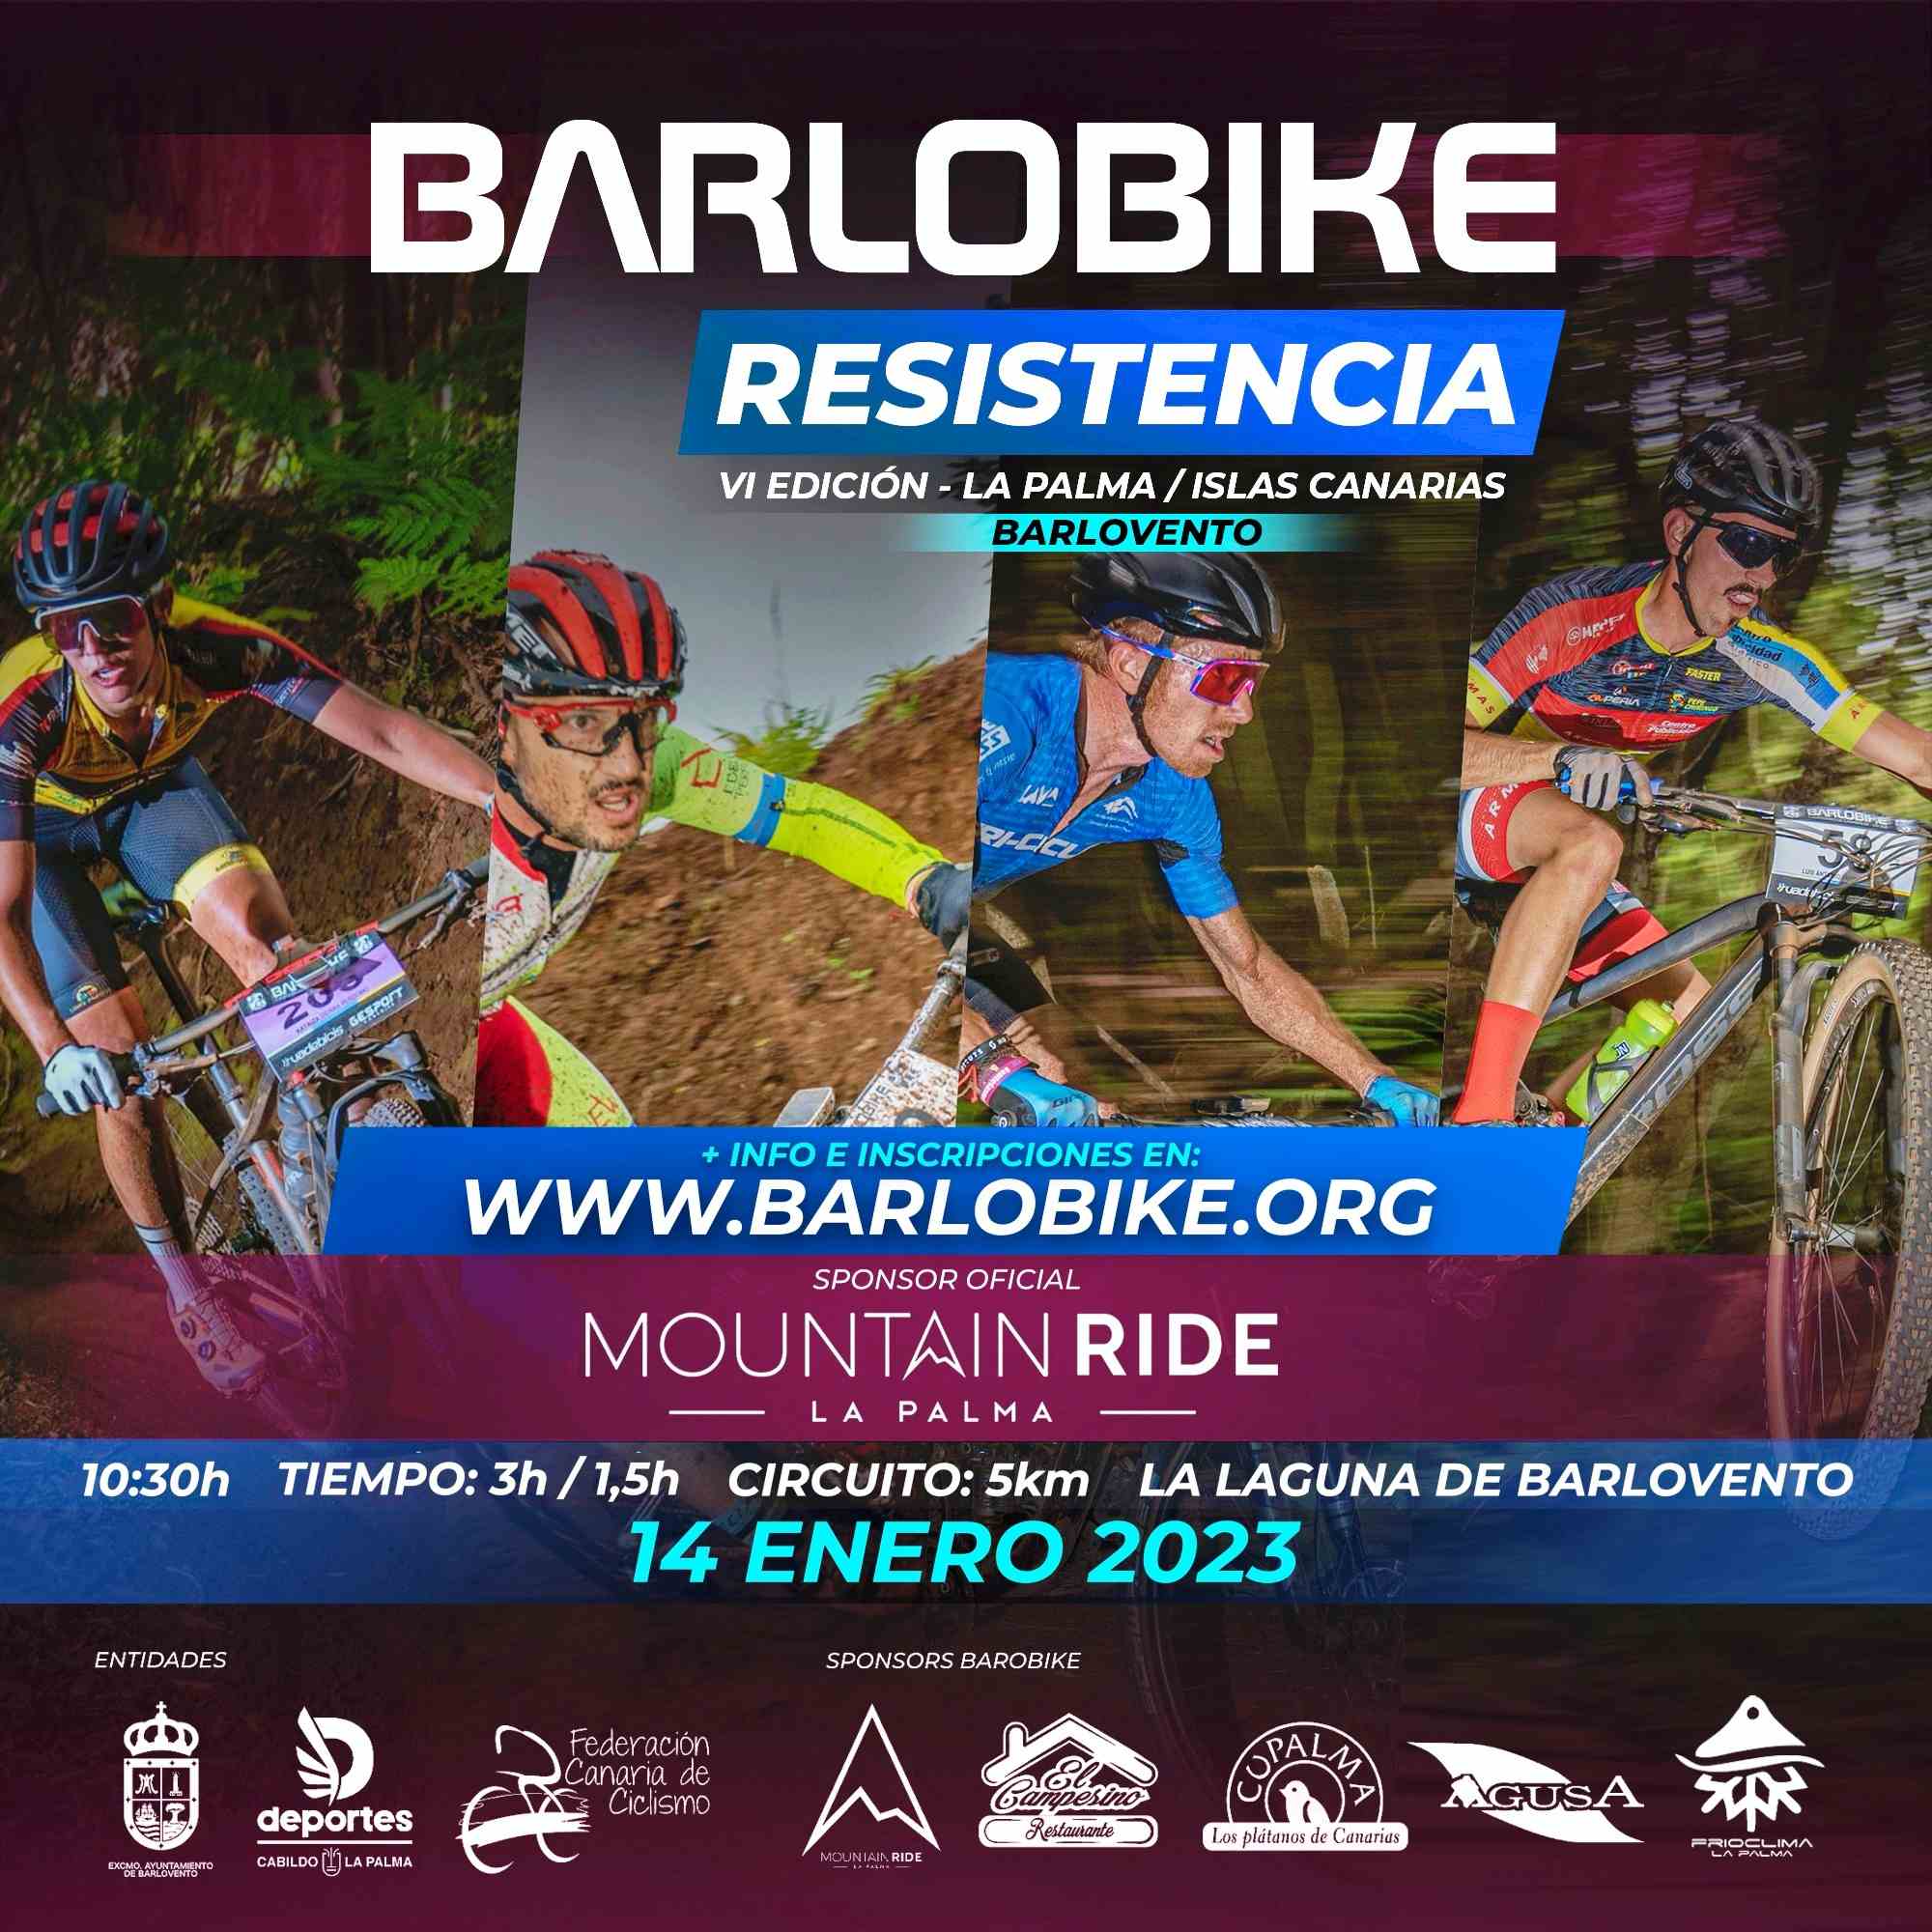 BARLOBIKE XC0 RESISTENCIA 2023 - Inscreva-se